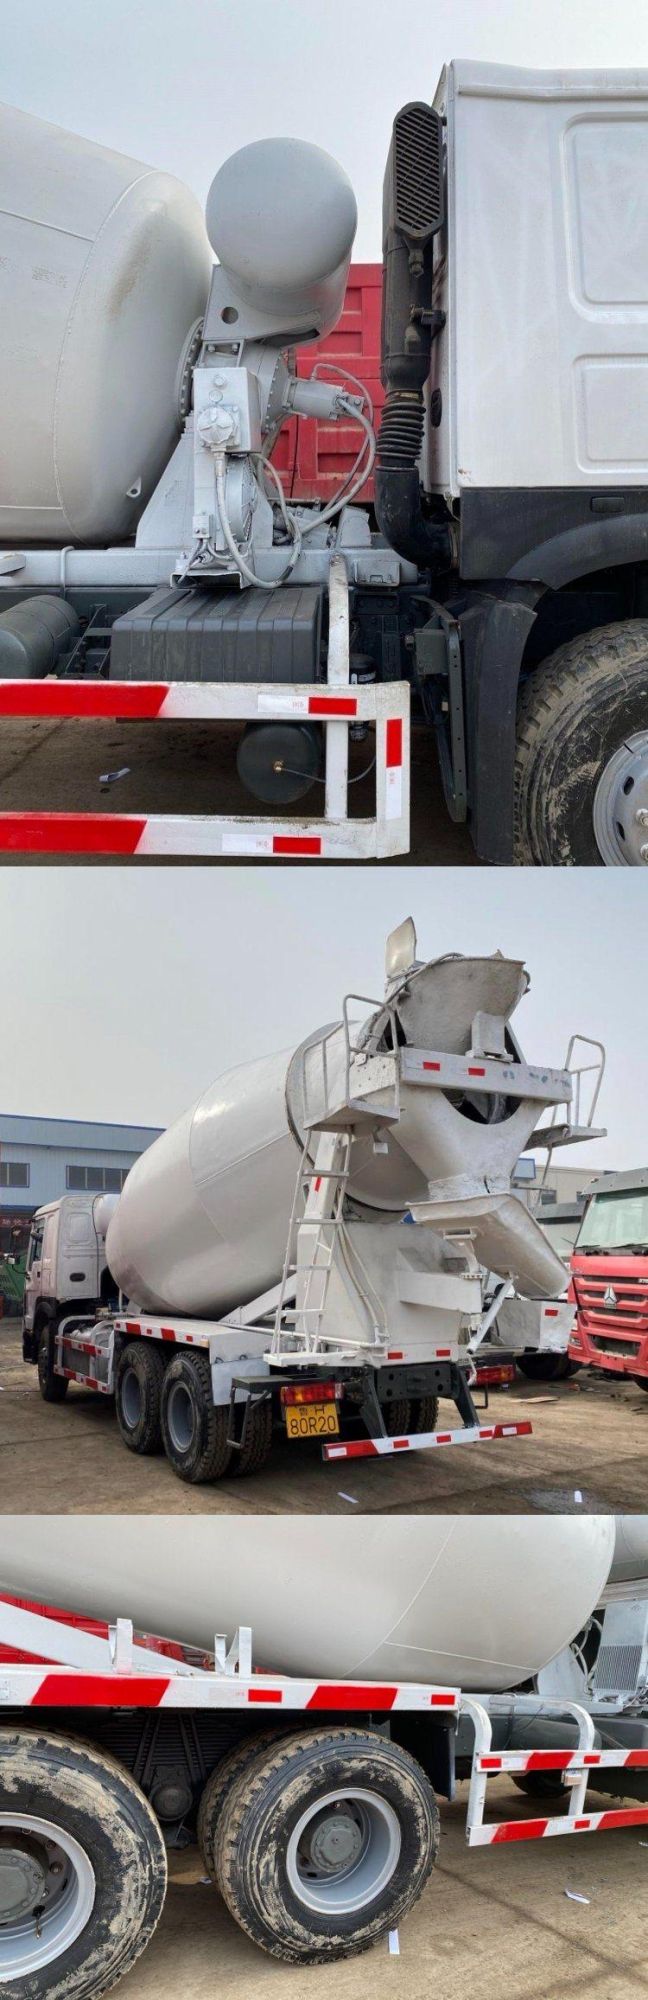 China Truck Sinotruk HOWO 6X4 Mixer 10m3 Concrete Mixer Truck for Sale